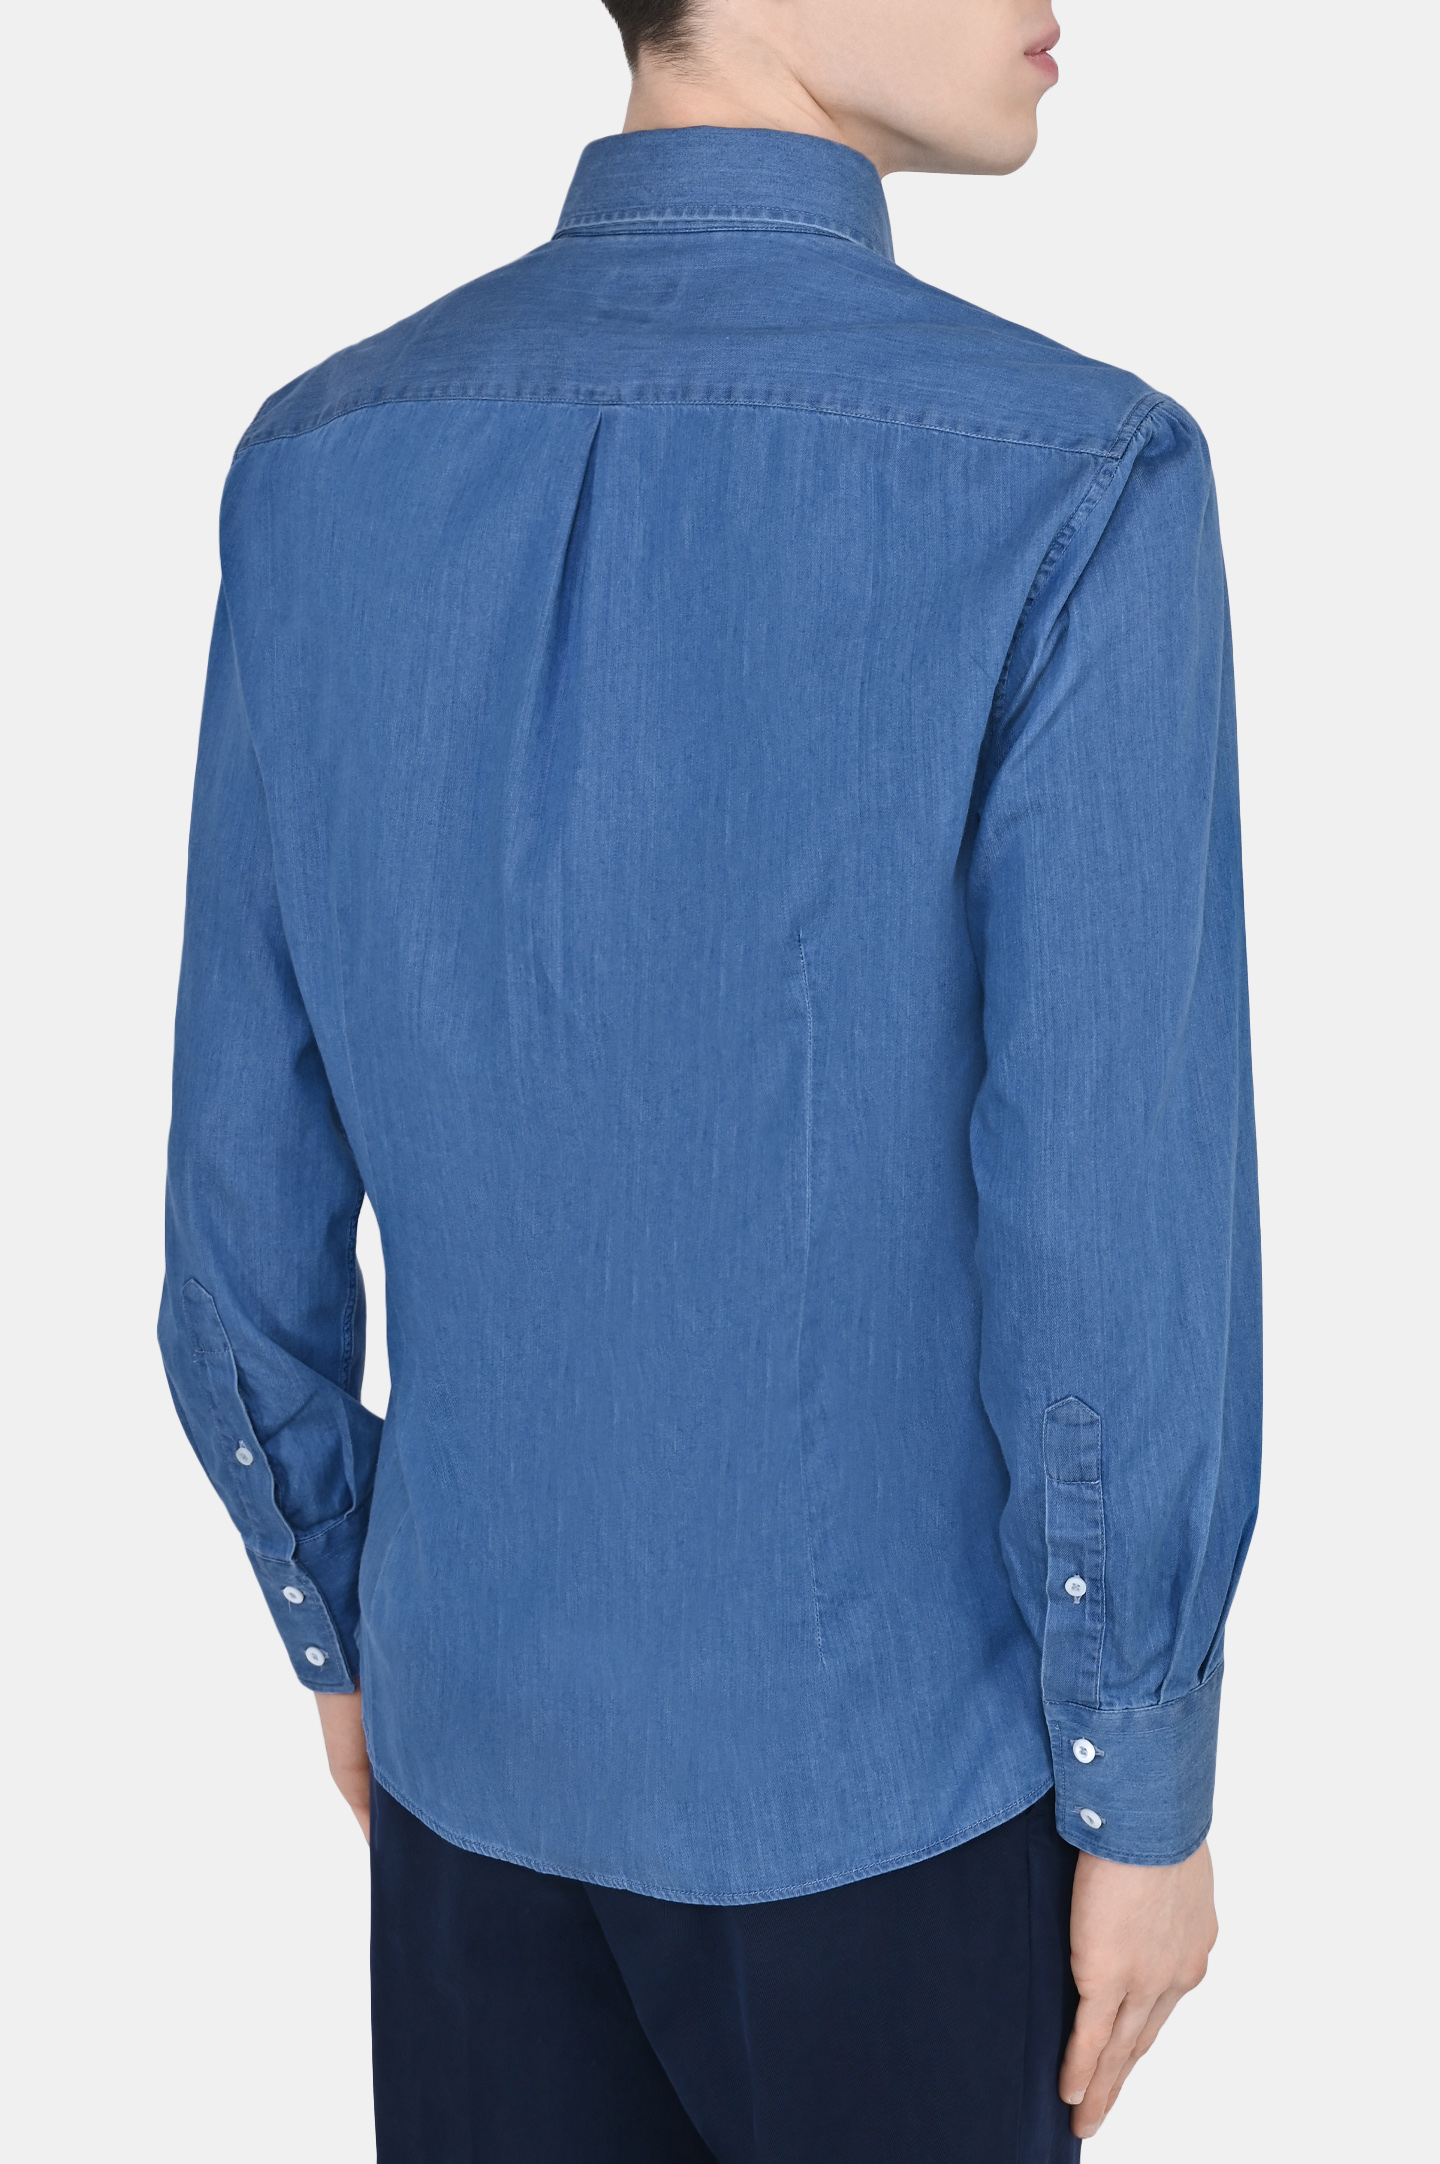 Рубашка BRUNELLO  CUCINELLI MR6831716, цвет: Синий, Мужской